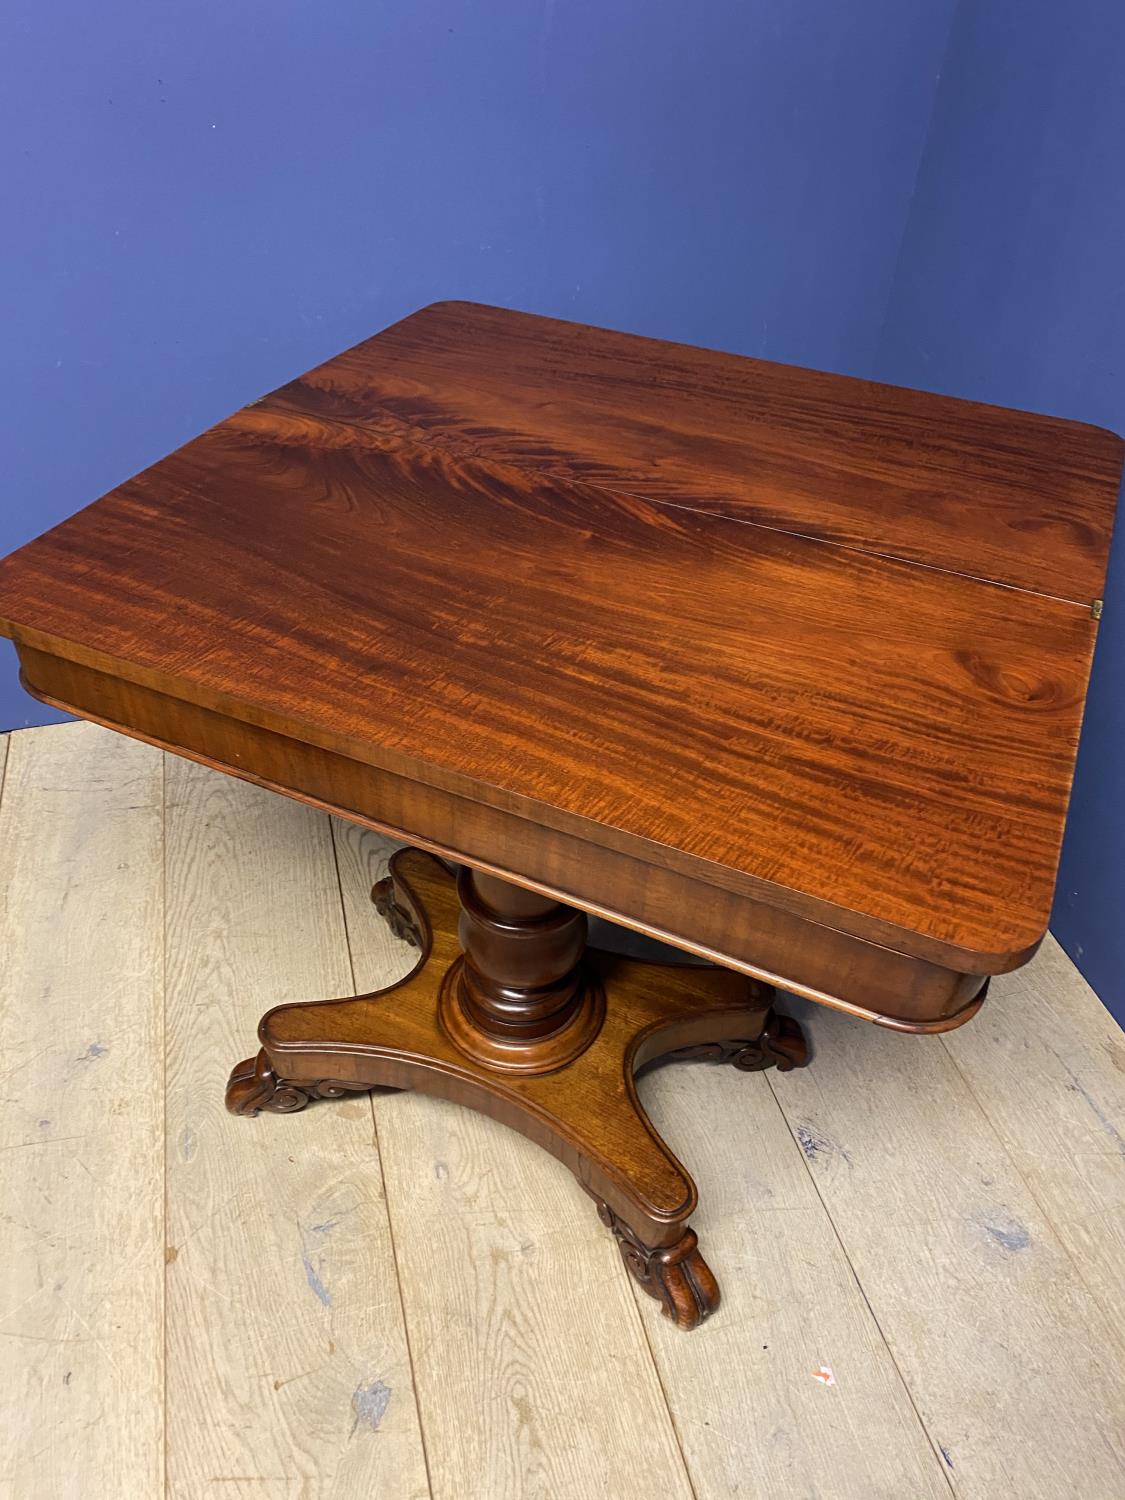 Early Victorian pedestal foldover mahogany tea table 92cmL - Image 3 of 4